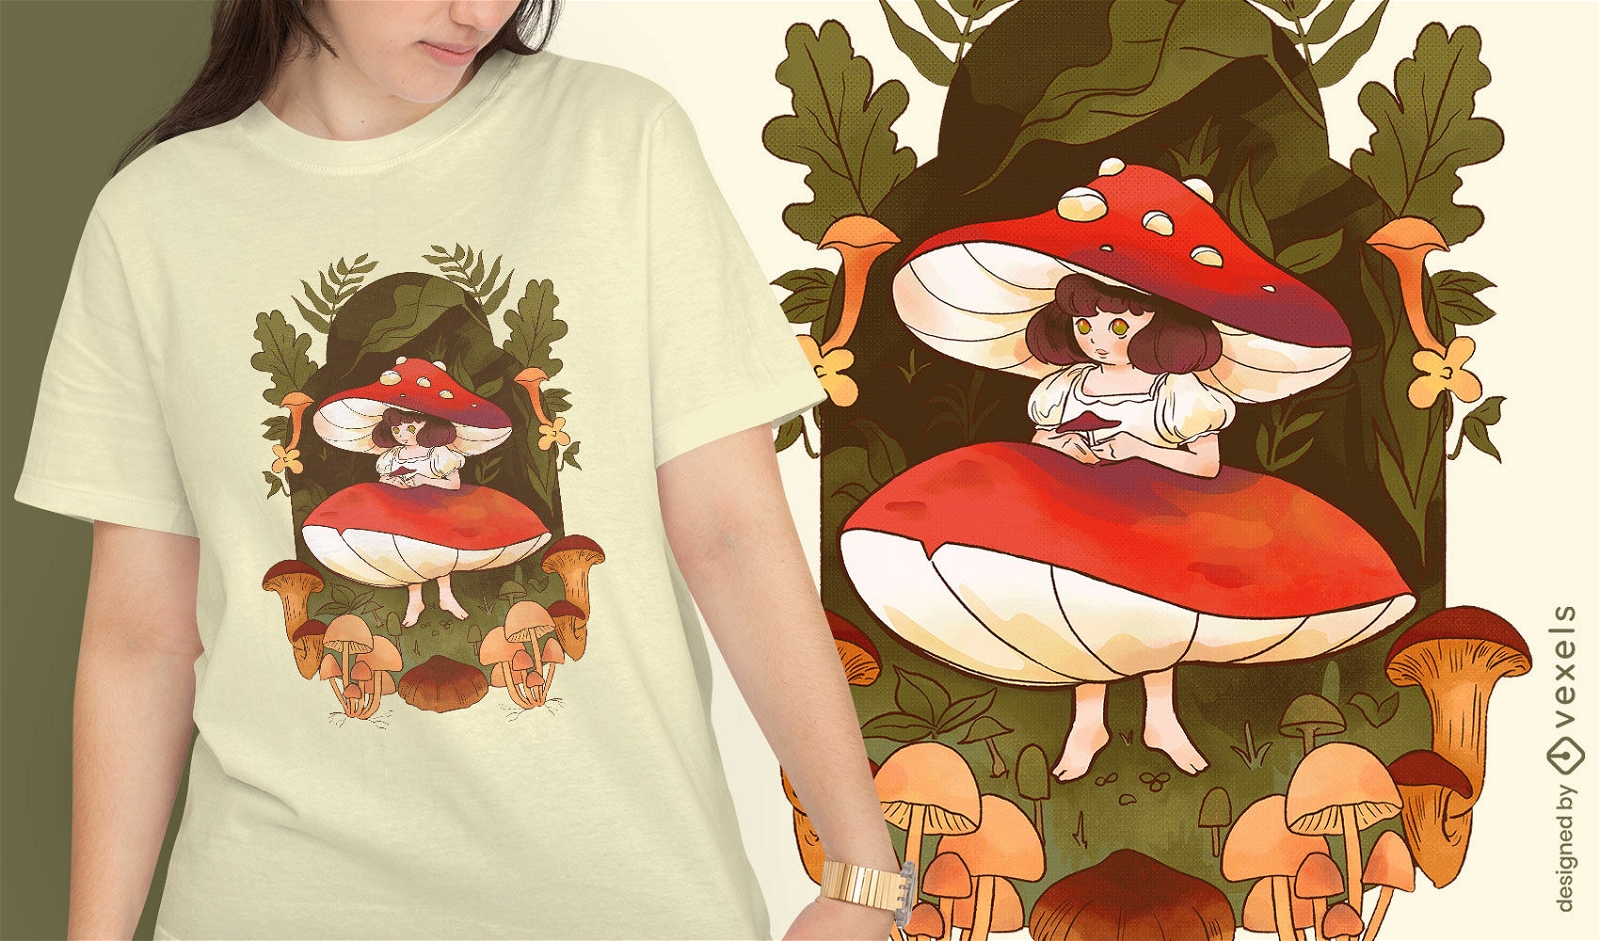 Mushroom girl fantasy t-shirt design